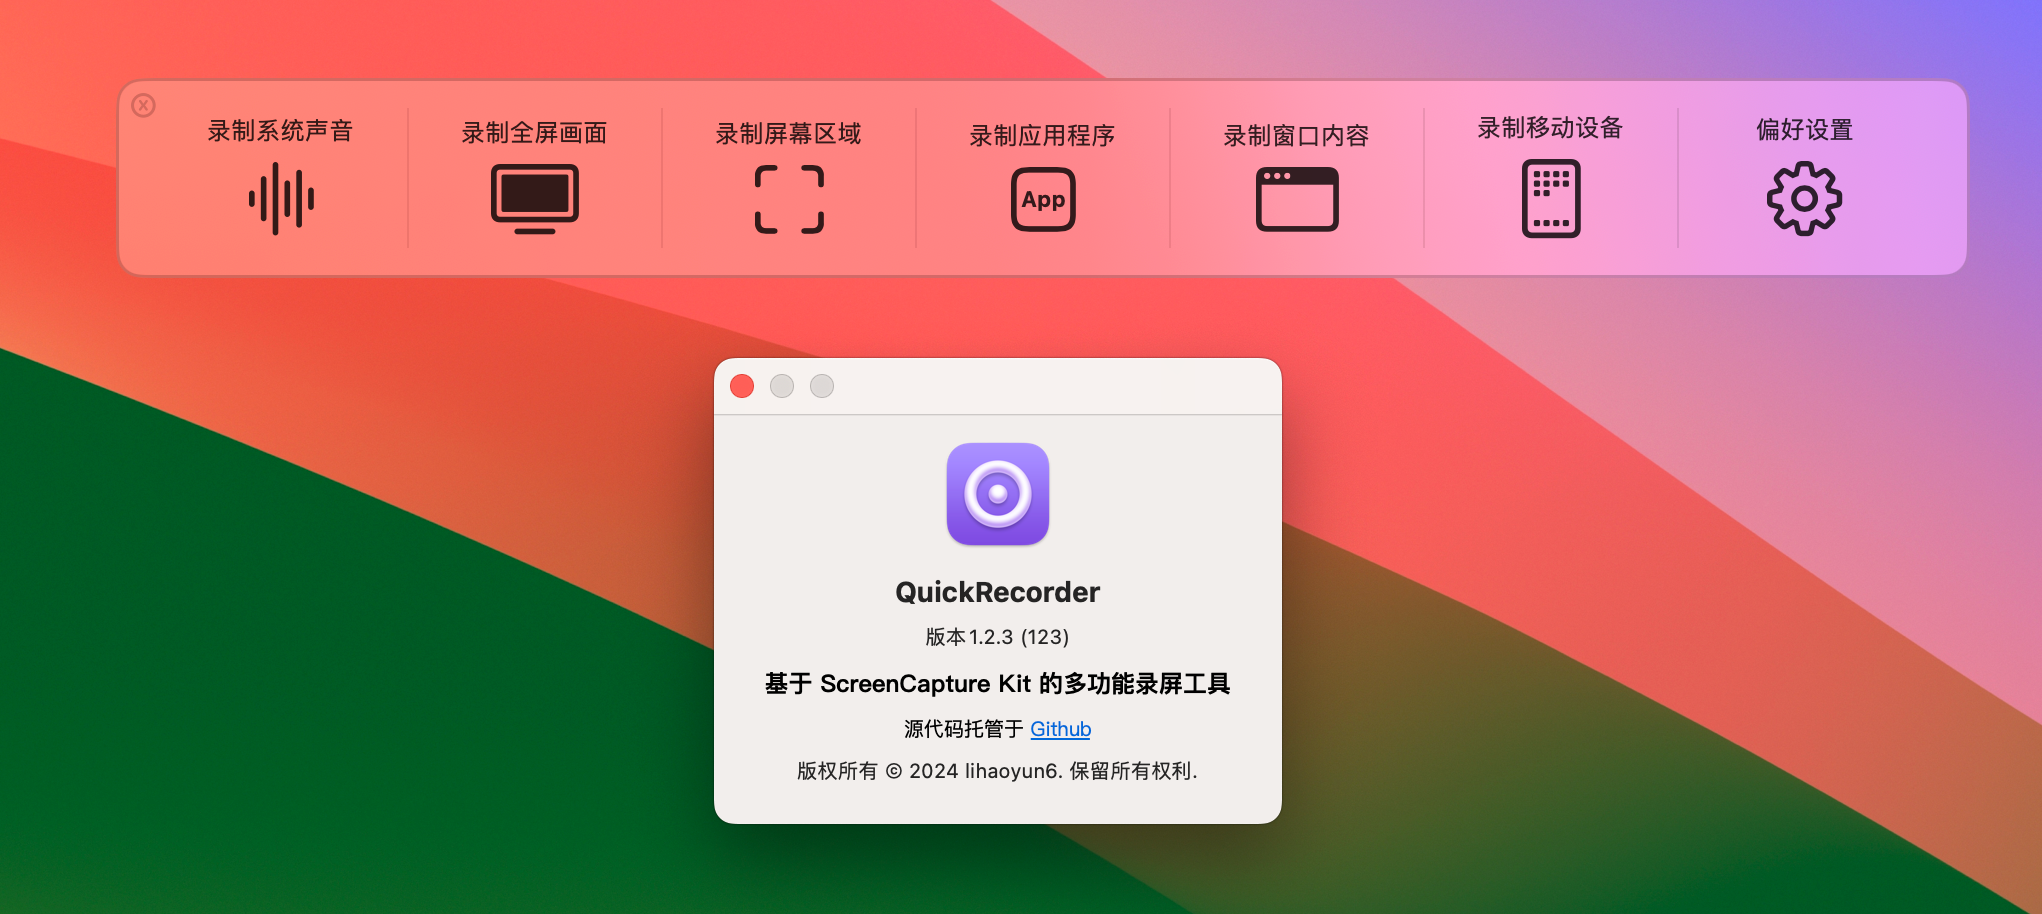 QuickRecorder for Mac v1.2.3 轻量高性能的macOS屏幕录制工具 免激活下载-1